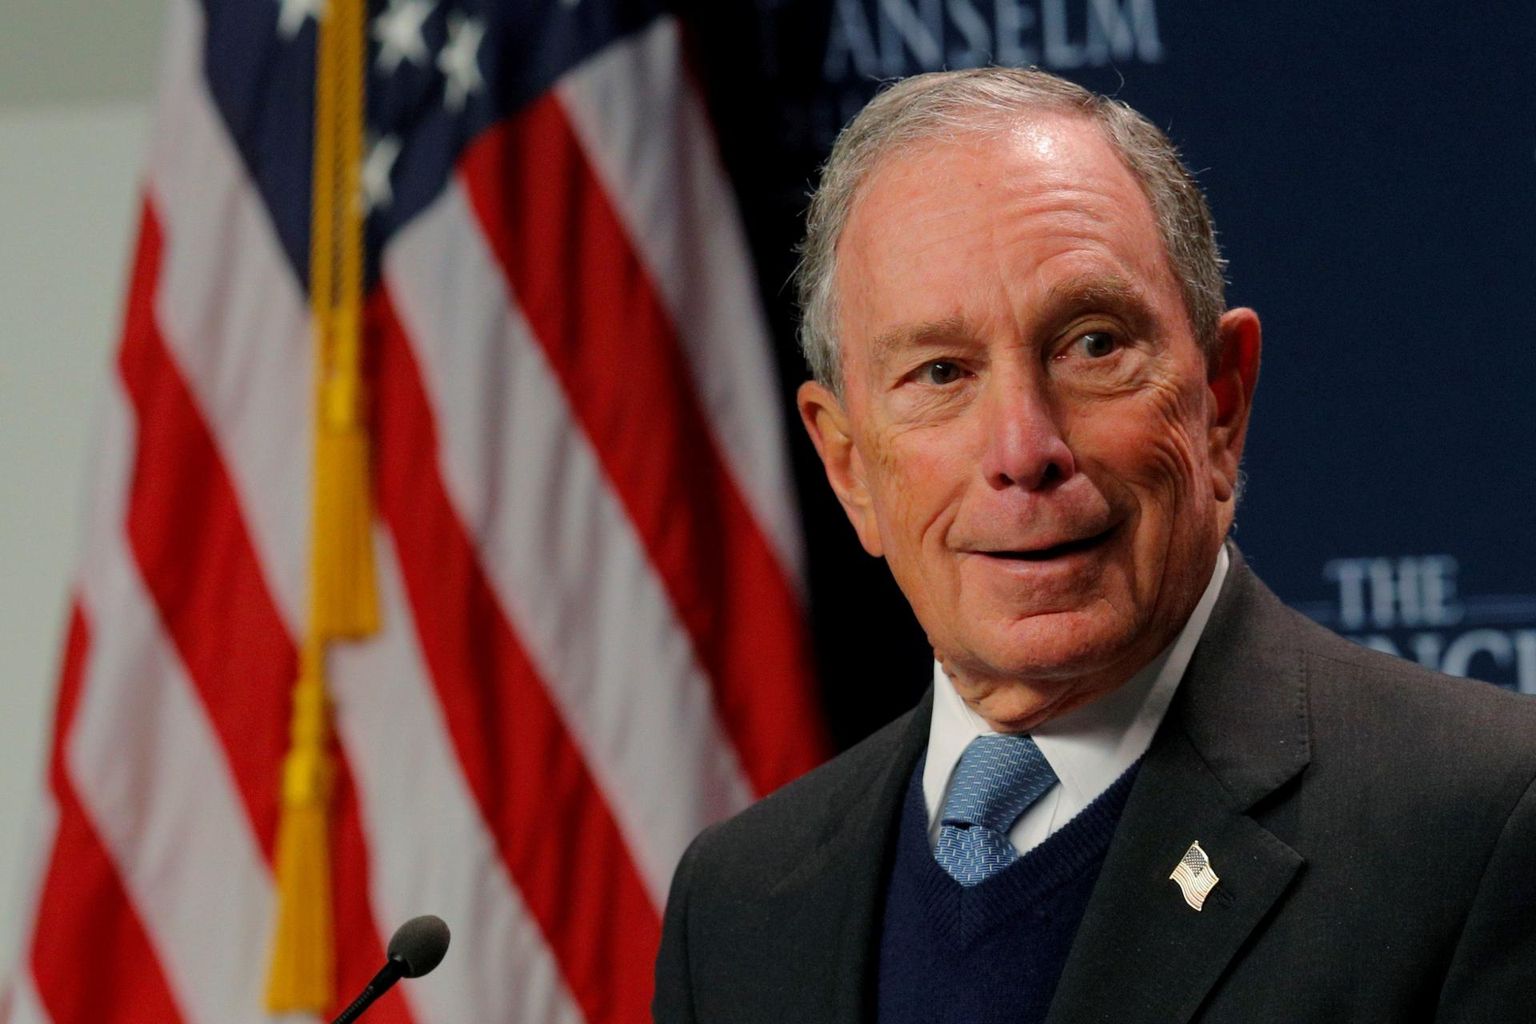 Michael Bloomberg.